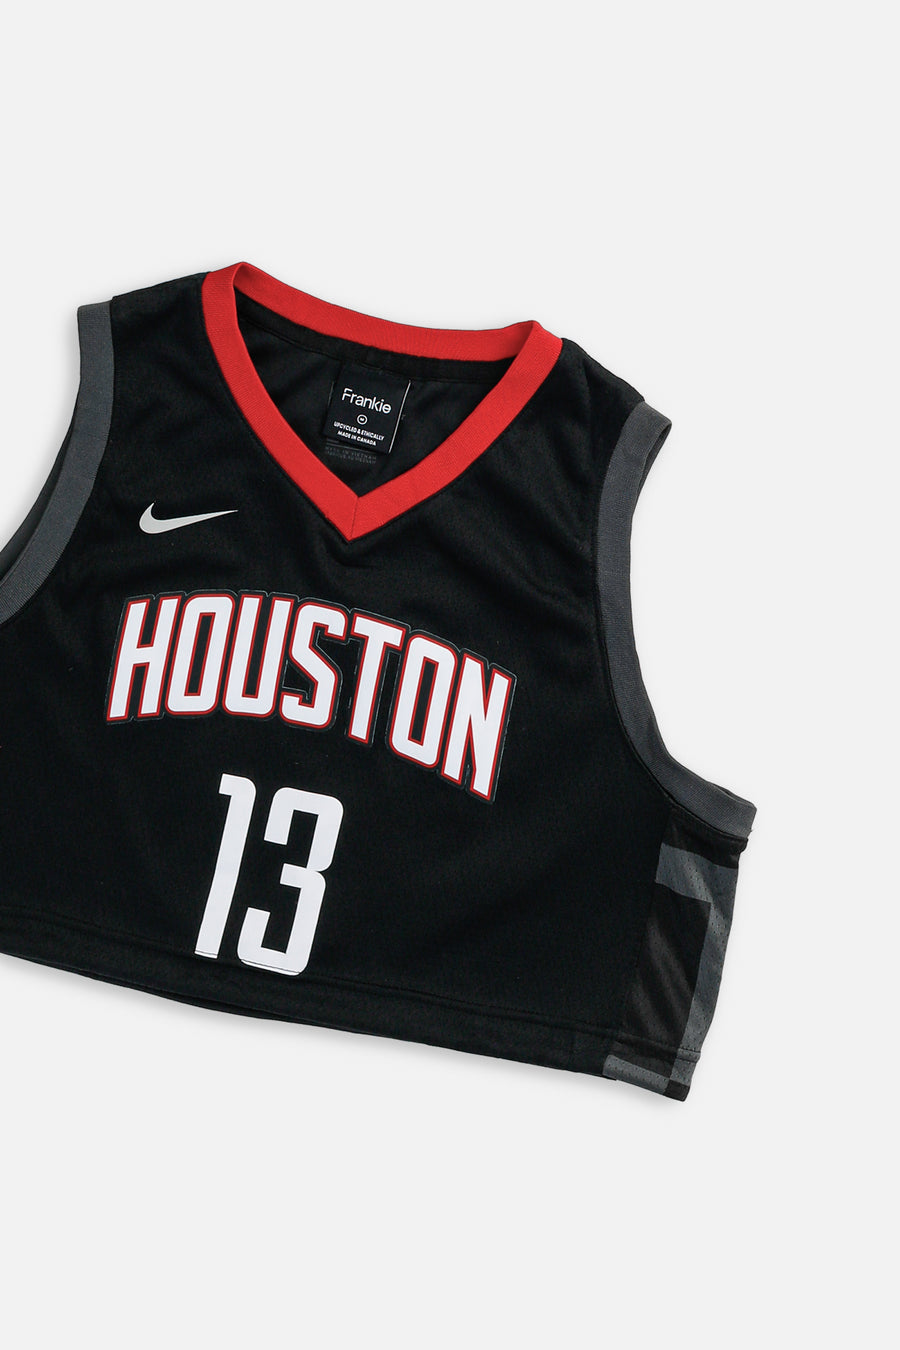 Rework Houston Rockets NBA Crop Jersey - M